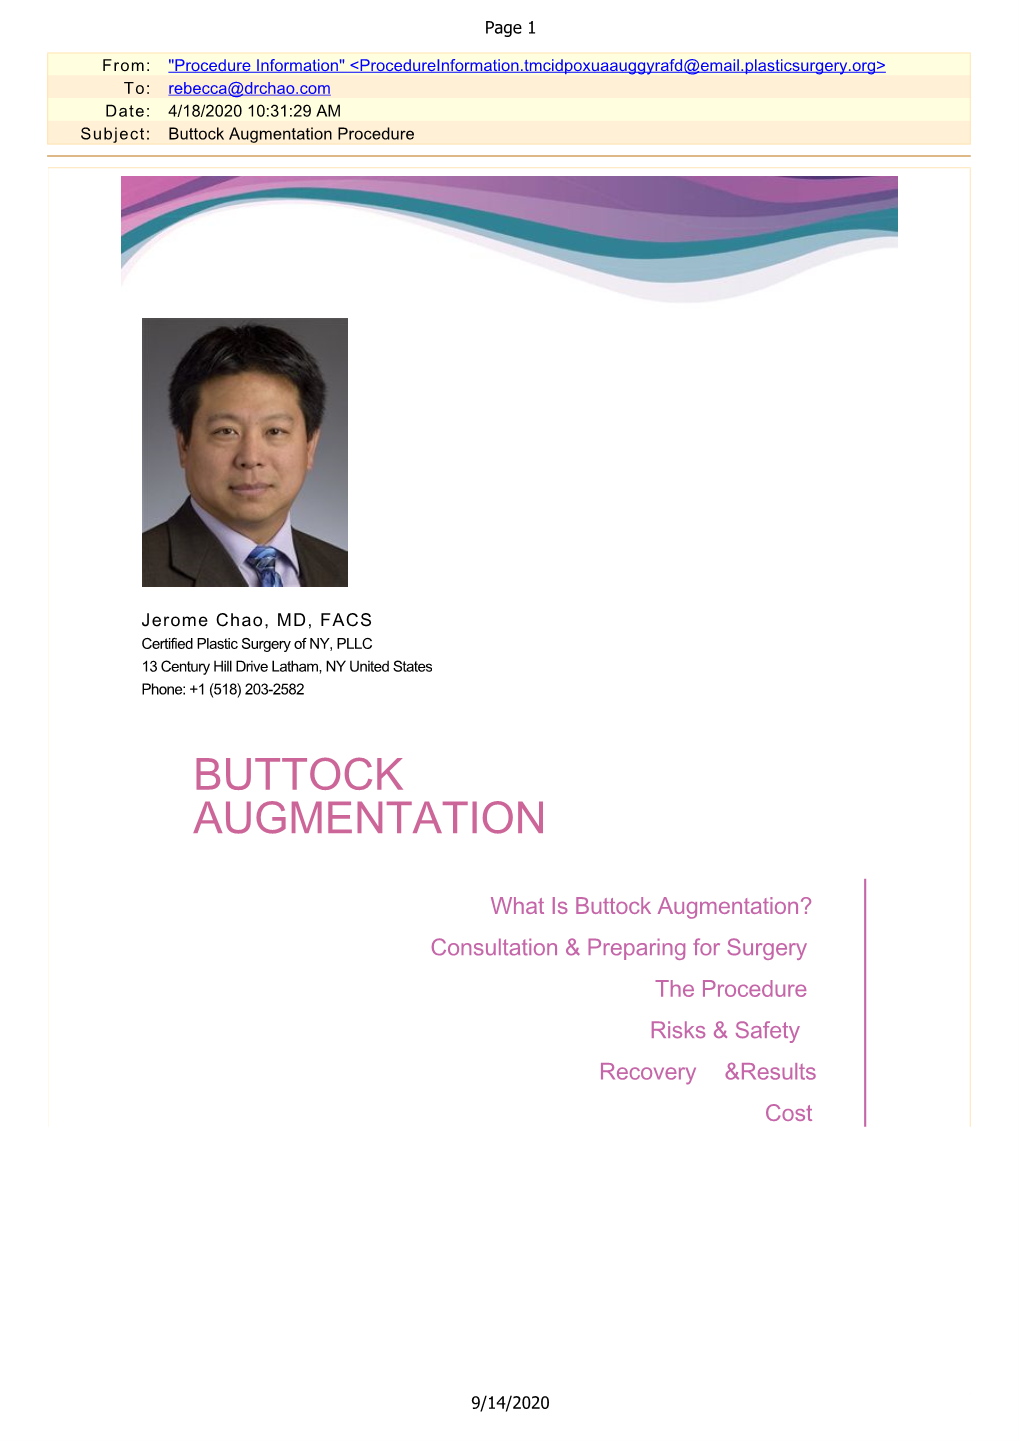 Buttock Augmentation Procedure